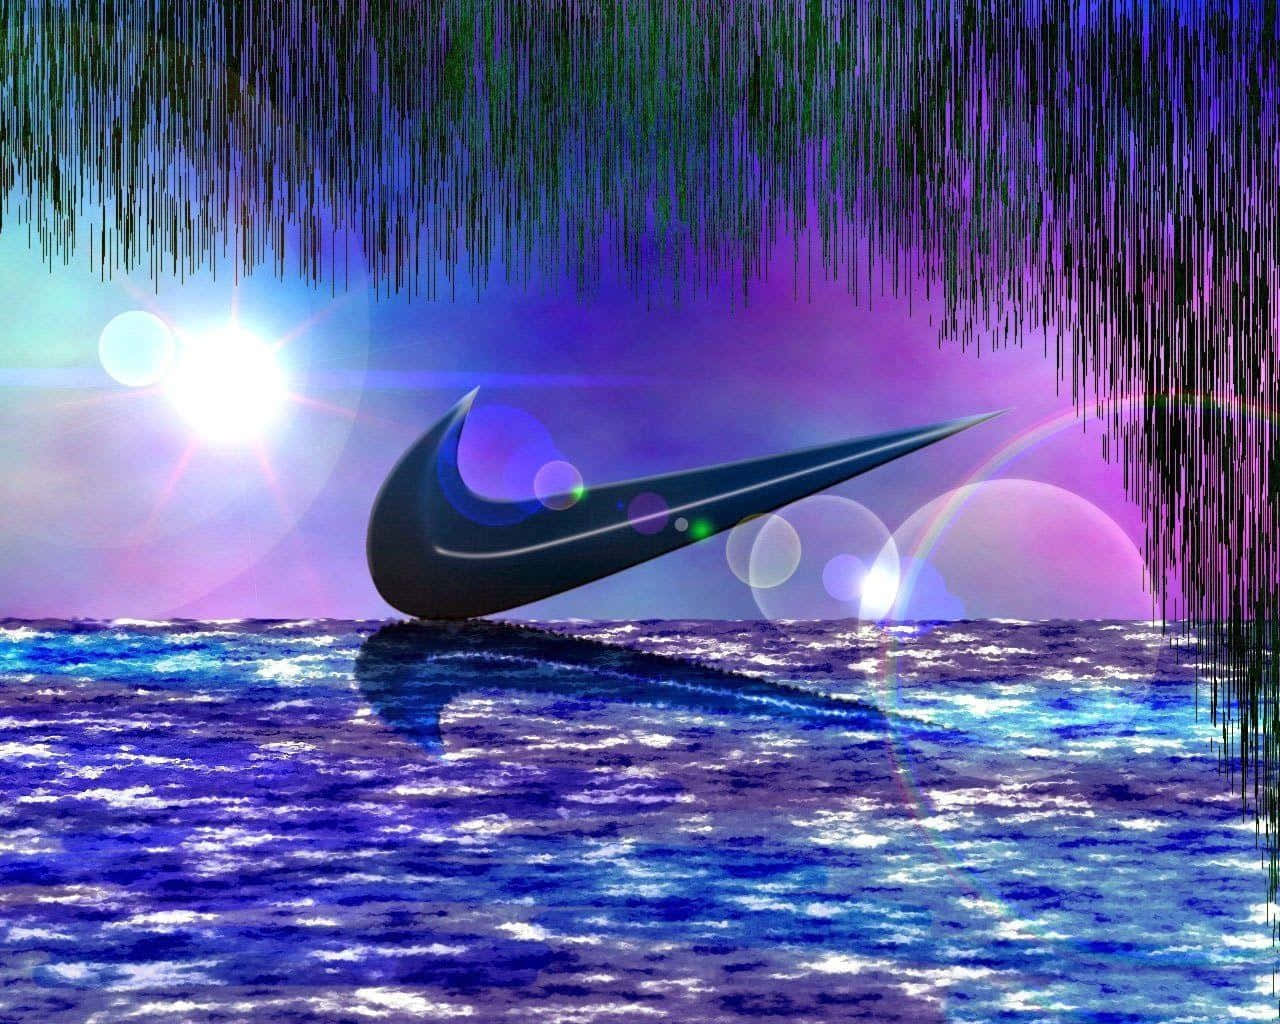 Nikeswoosh En El Agua Por Sarah Mcdonald.